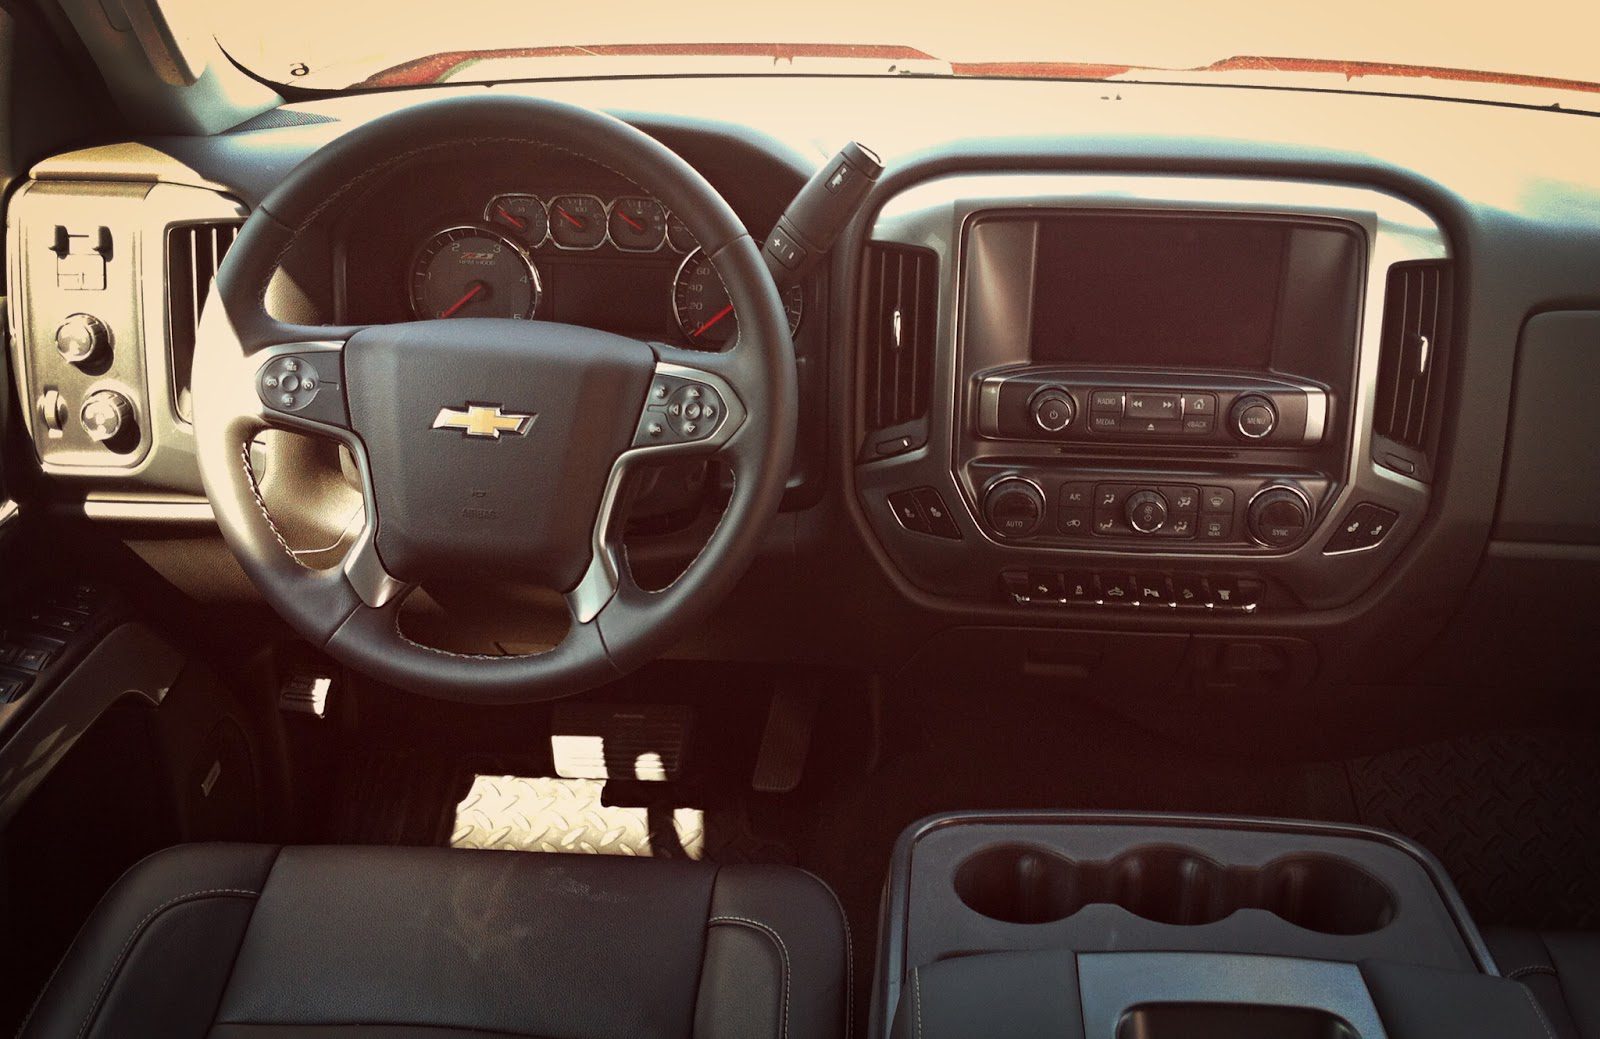 2014 Chevrolet Silverado Hd 2500 Lt Interior Gcbc